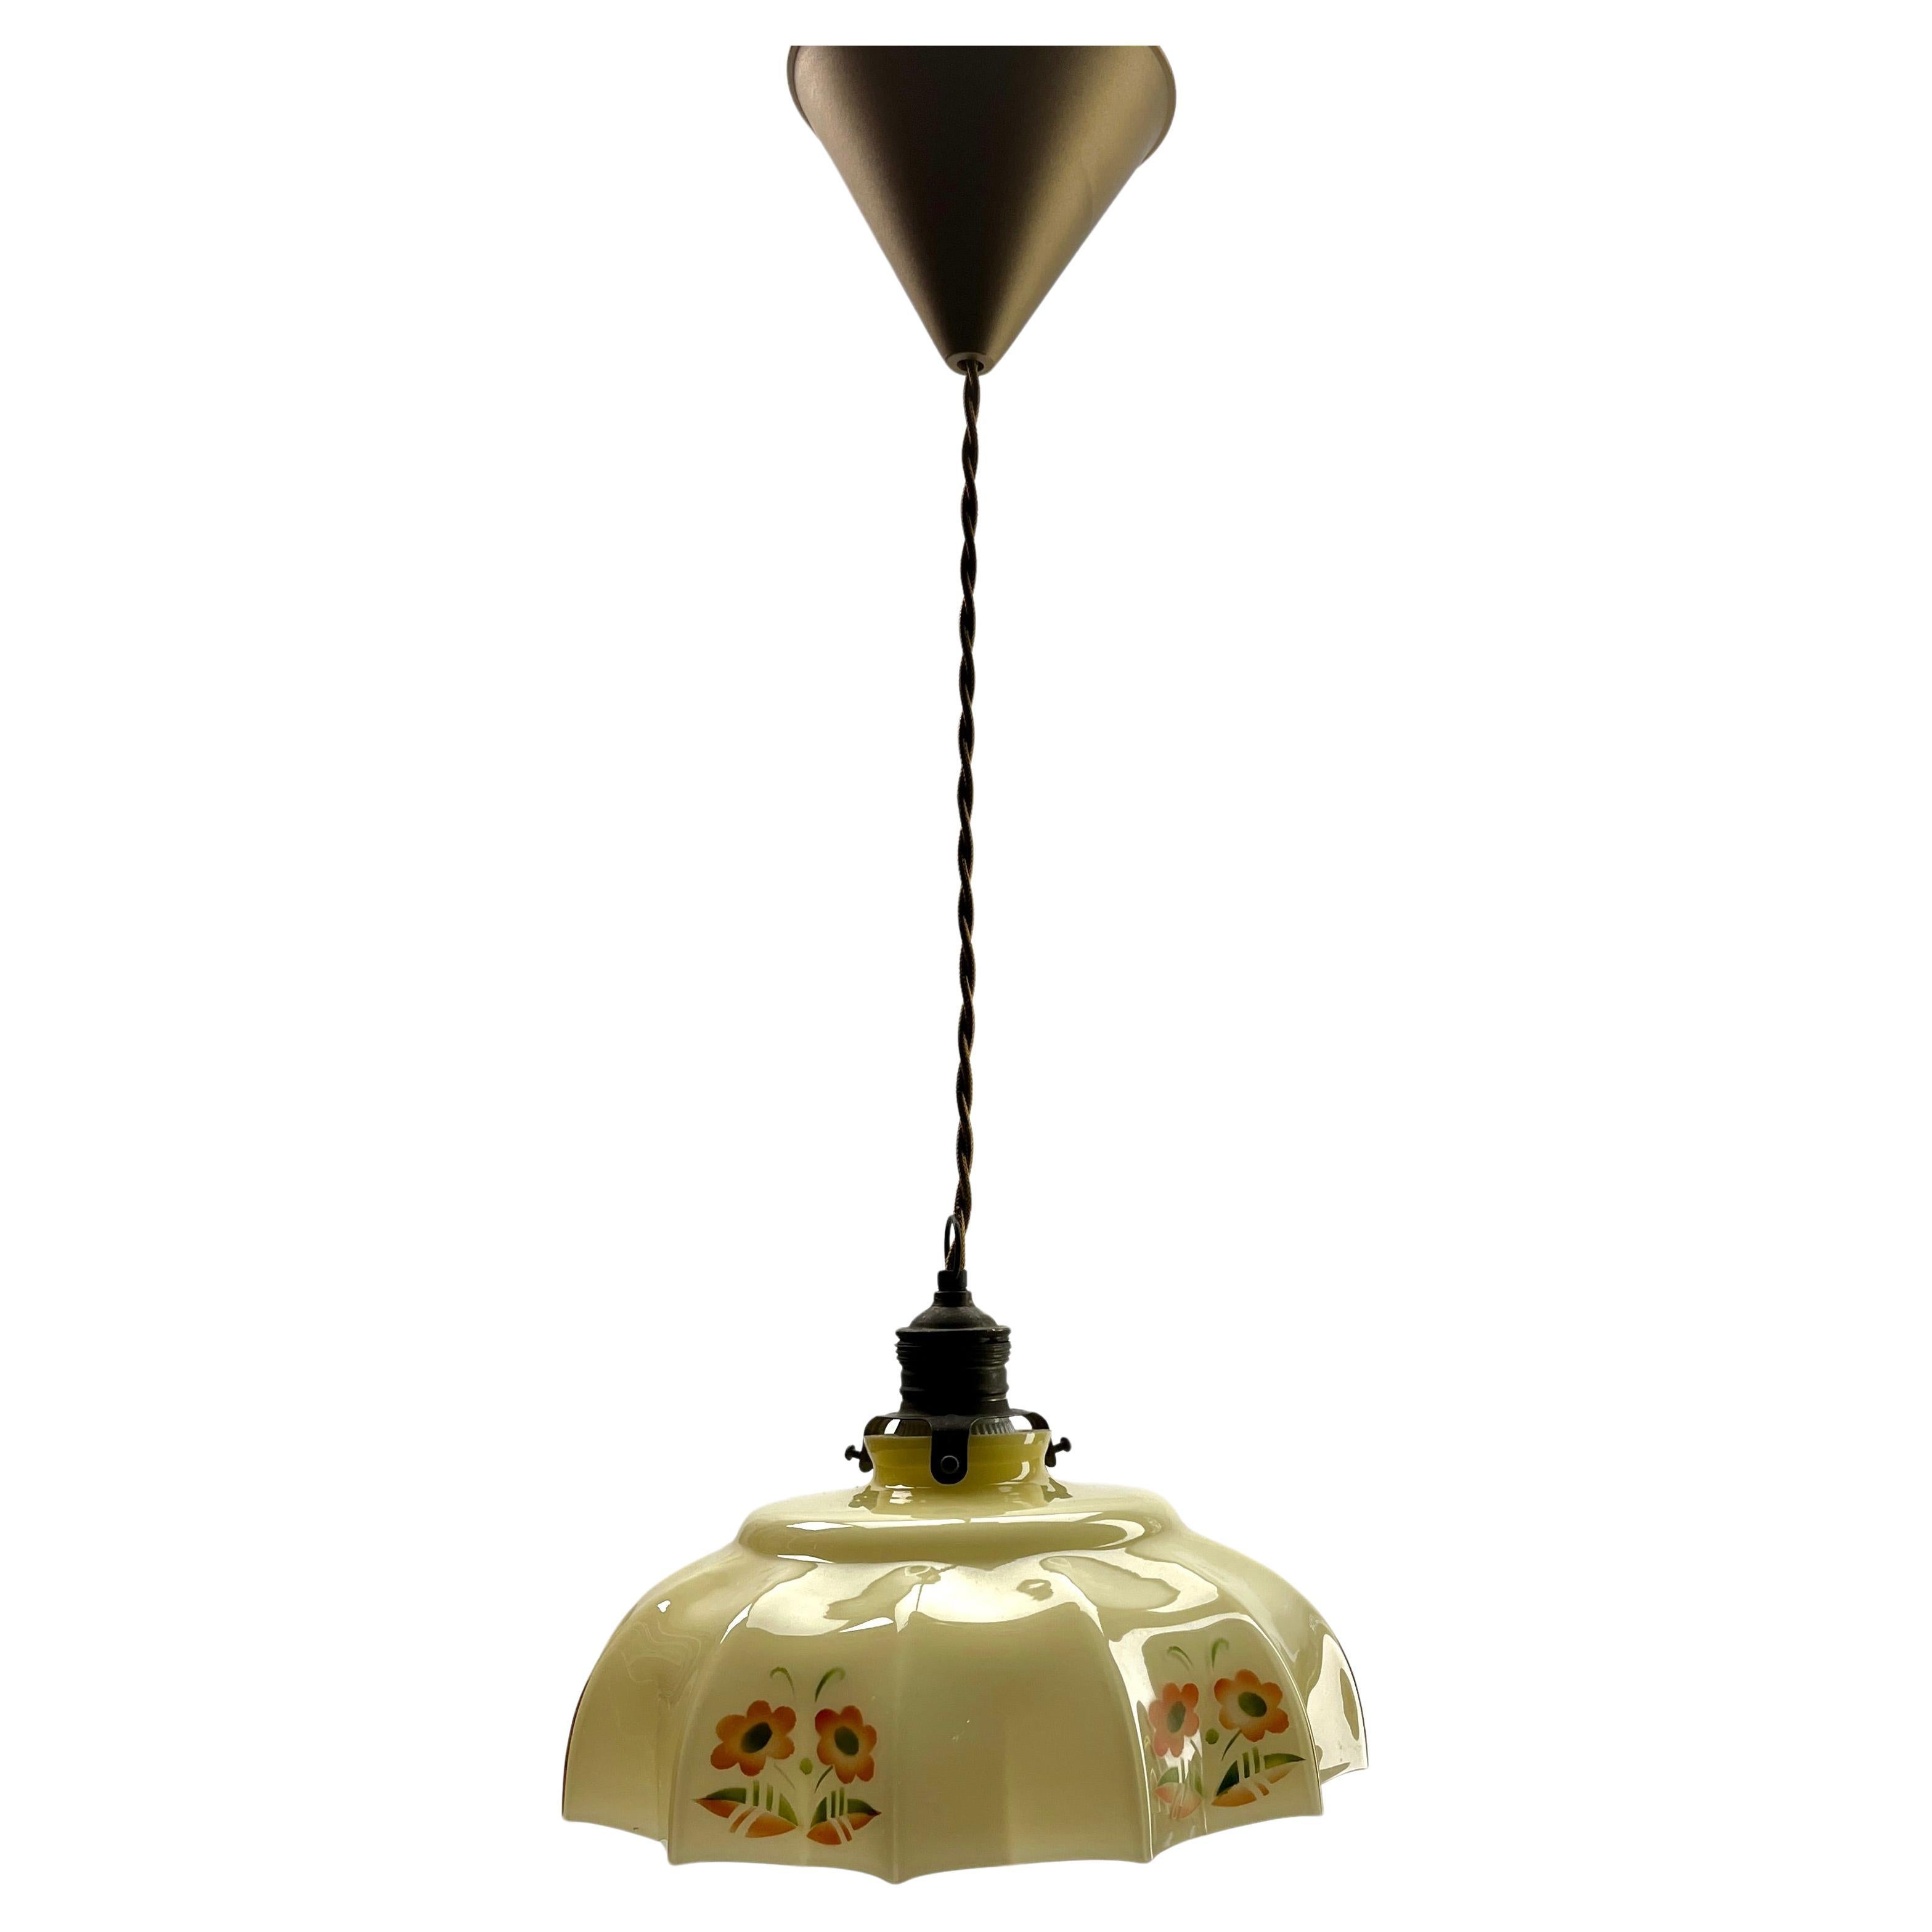 Hand-Painted Art Nouveau Opaline Ceiling Lamp, Scailmont Belgium Glass Shade, 1930s For Sale